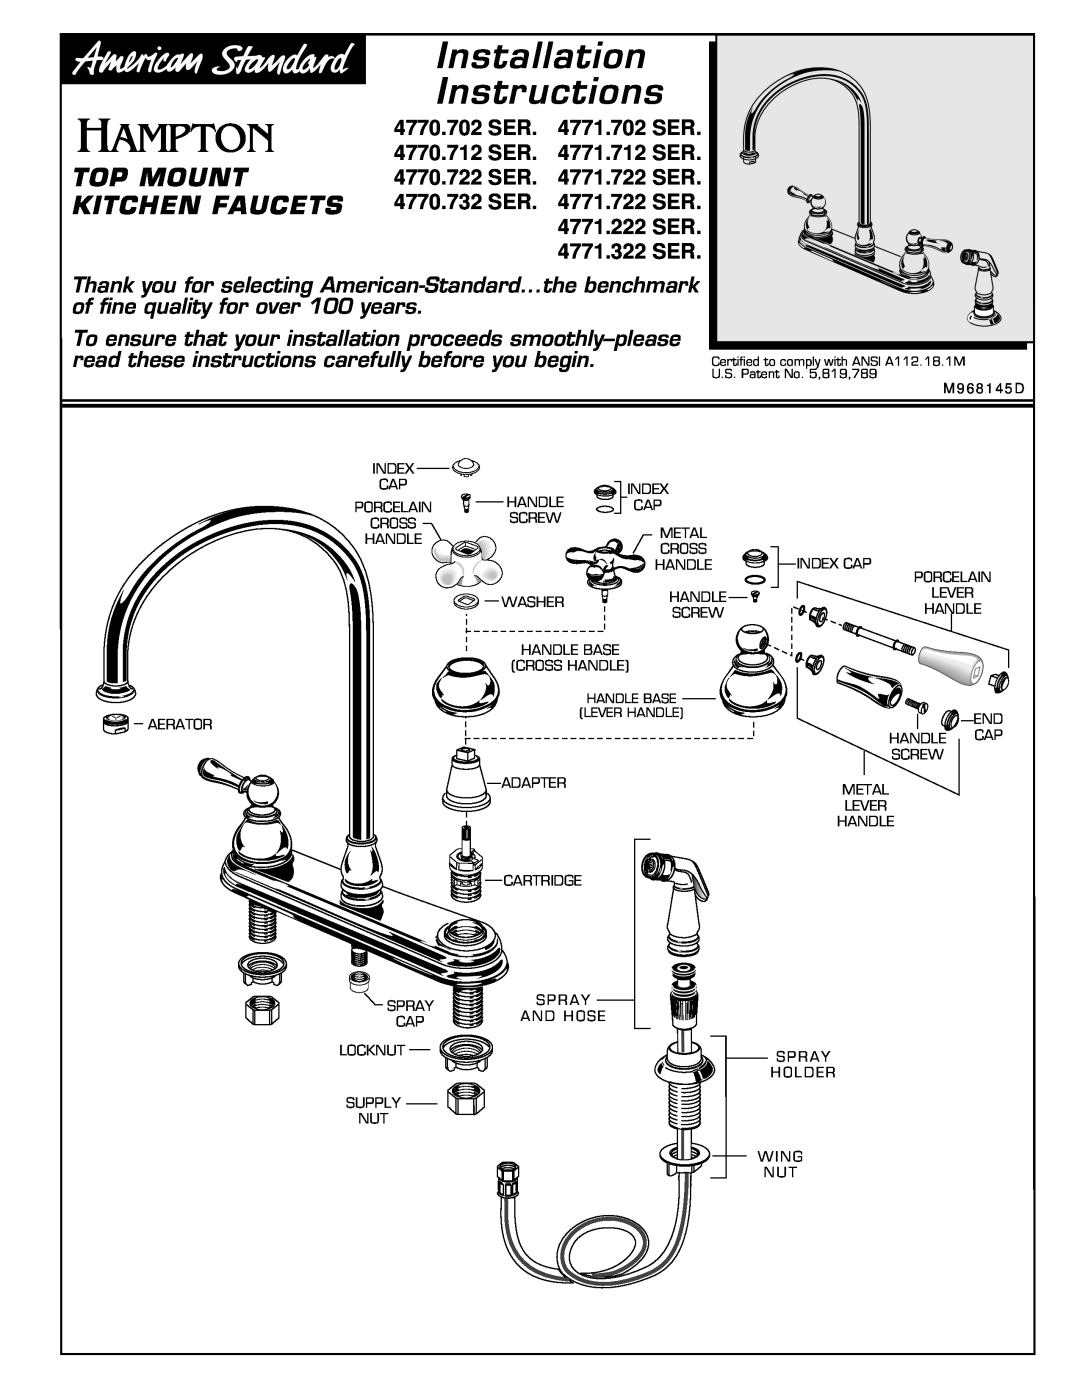 American Standard 4770.732 SER installation instructions Installation, Instructions, Top Mount, Kitchen Faucets 